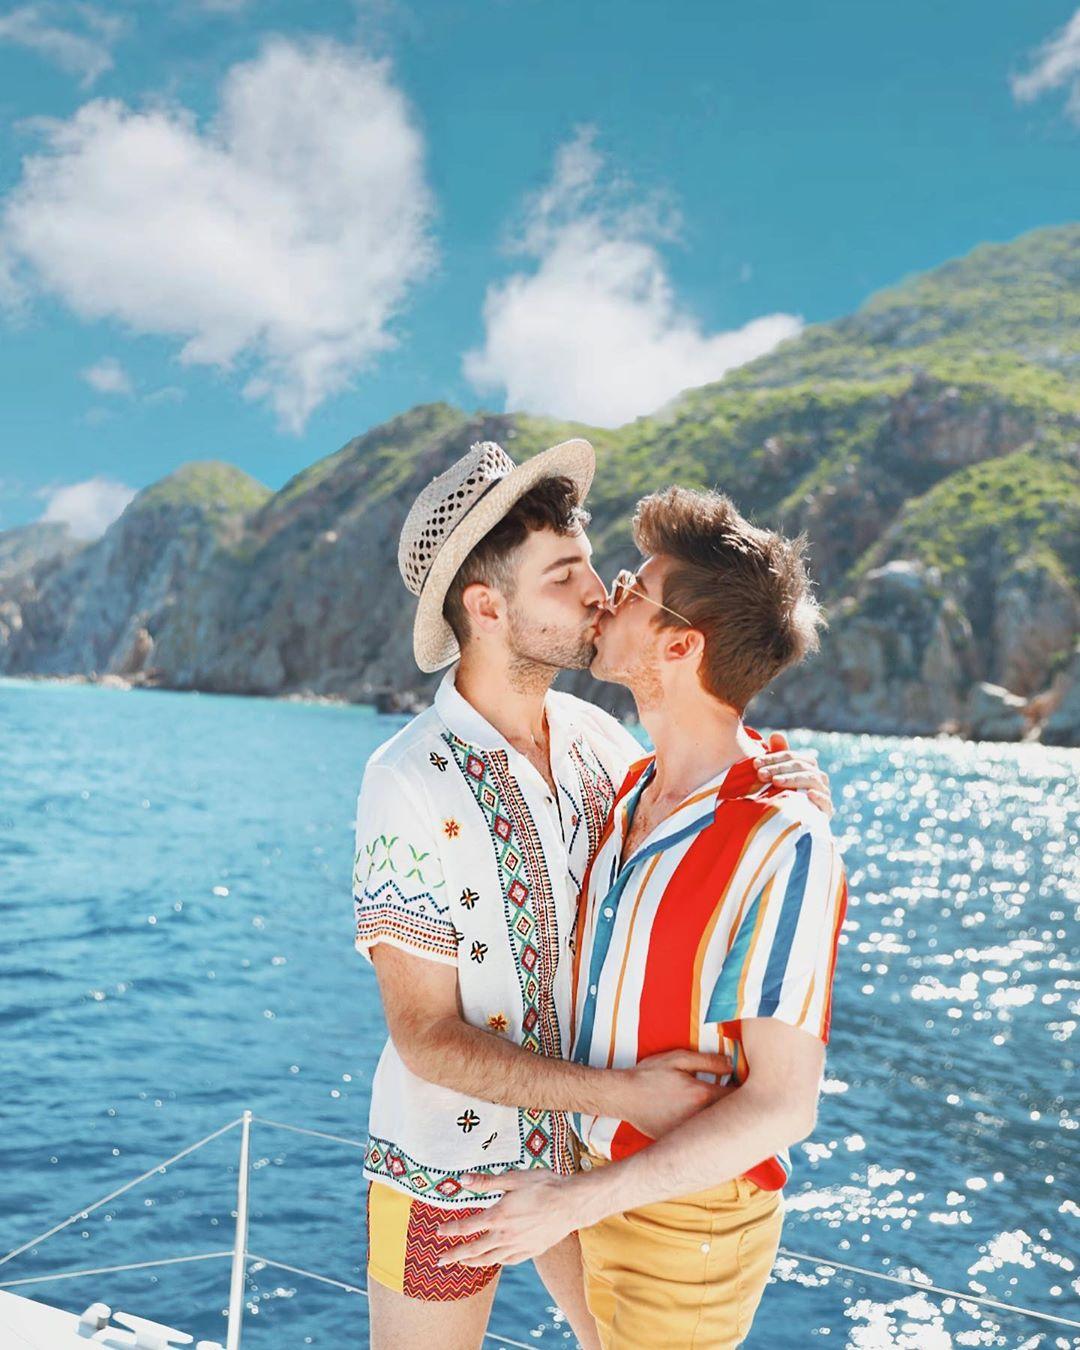 Joey Graceffa and Daniel Preda kiss on Instagram